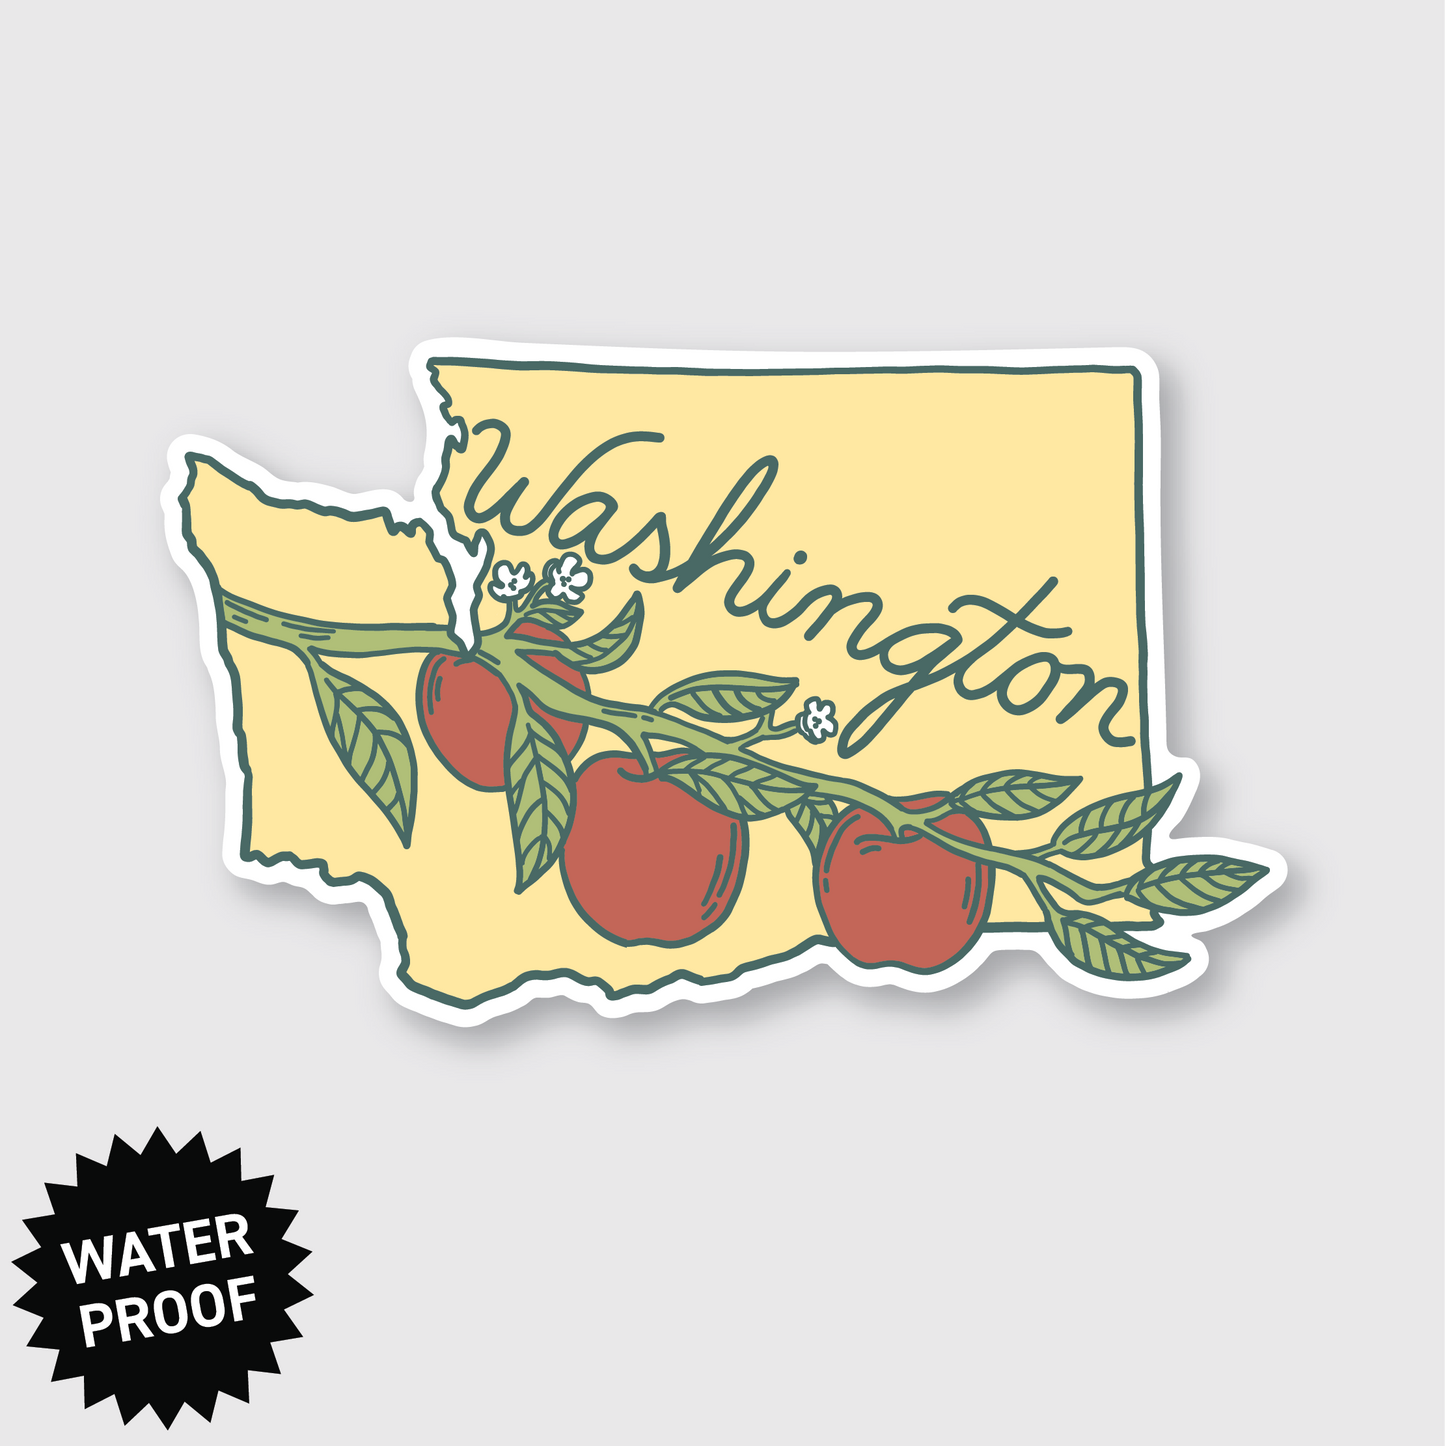 Washington Apples Sticker